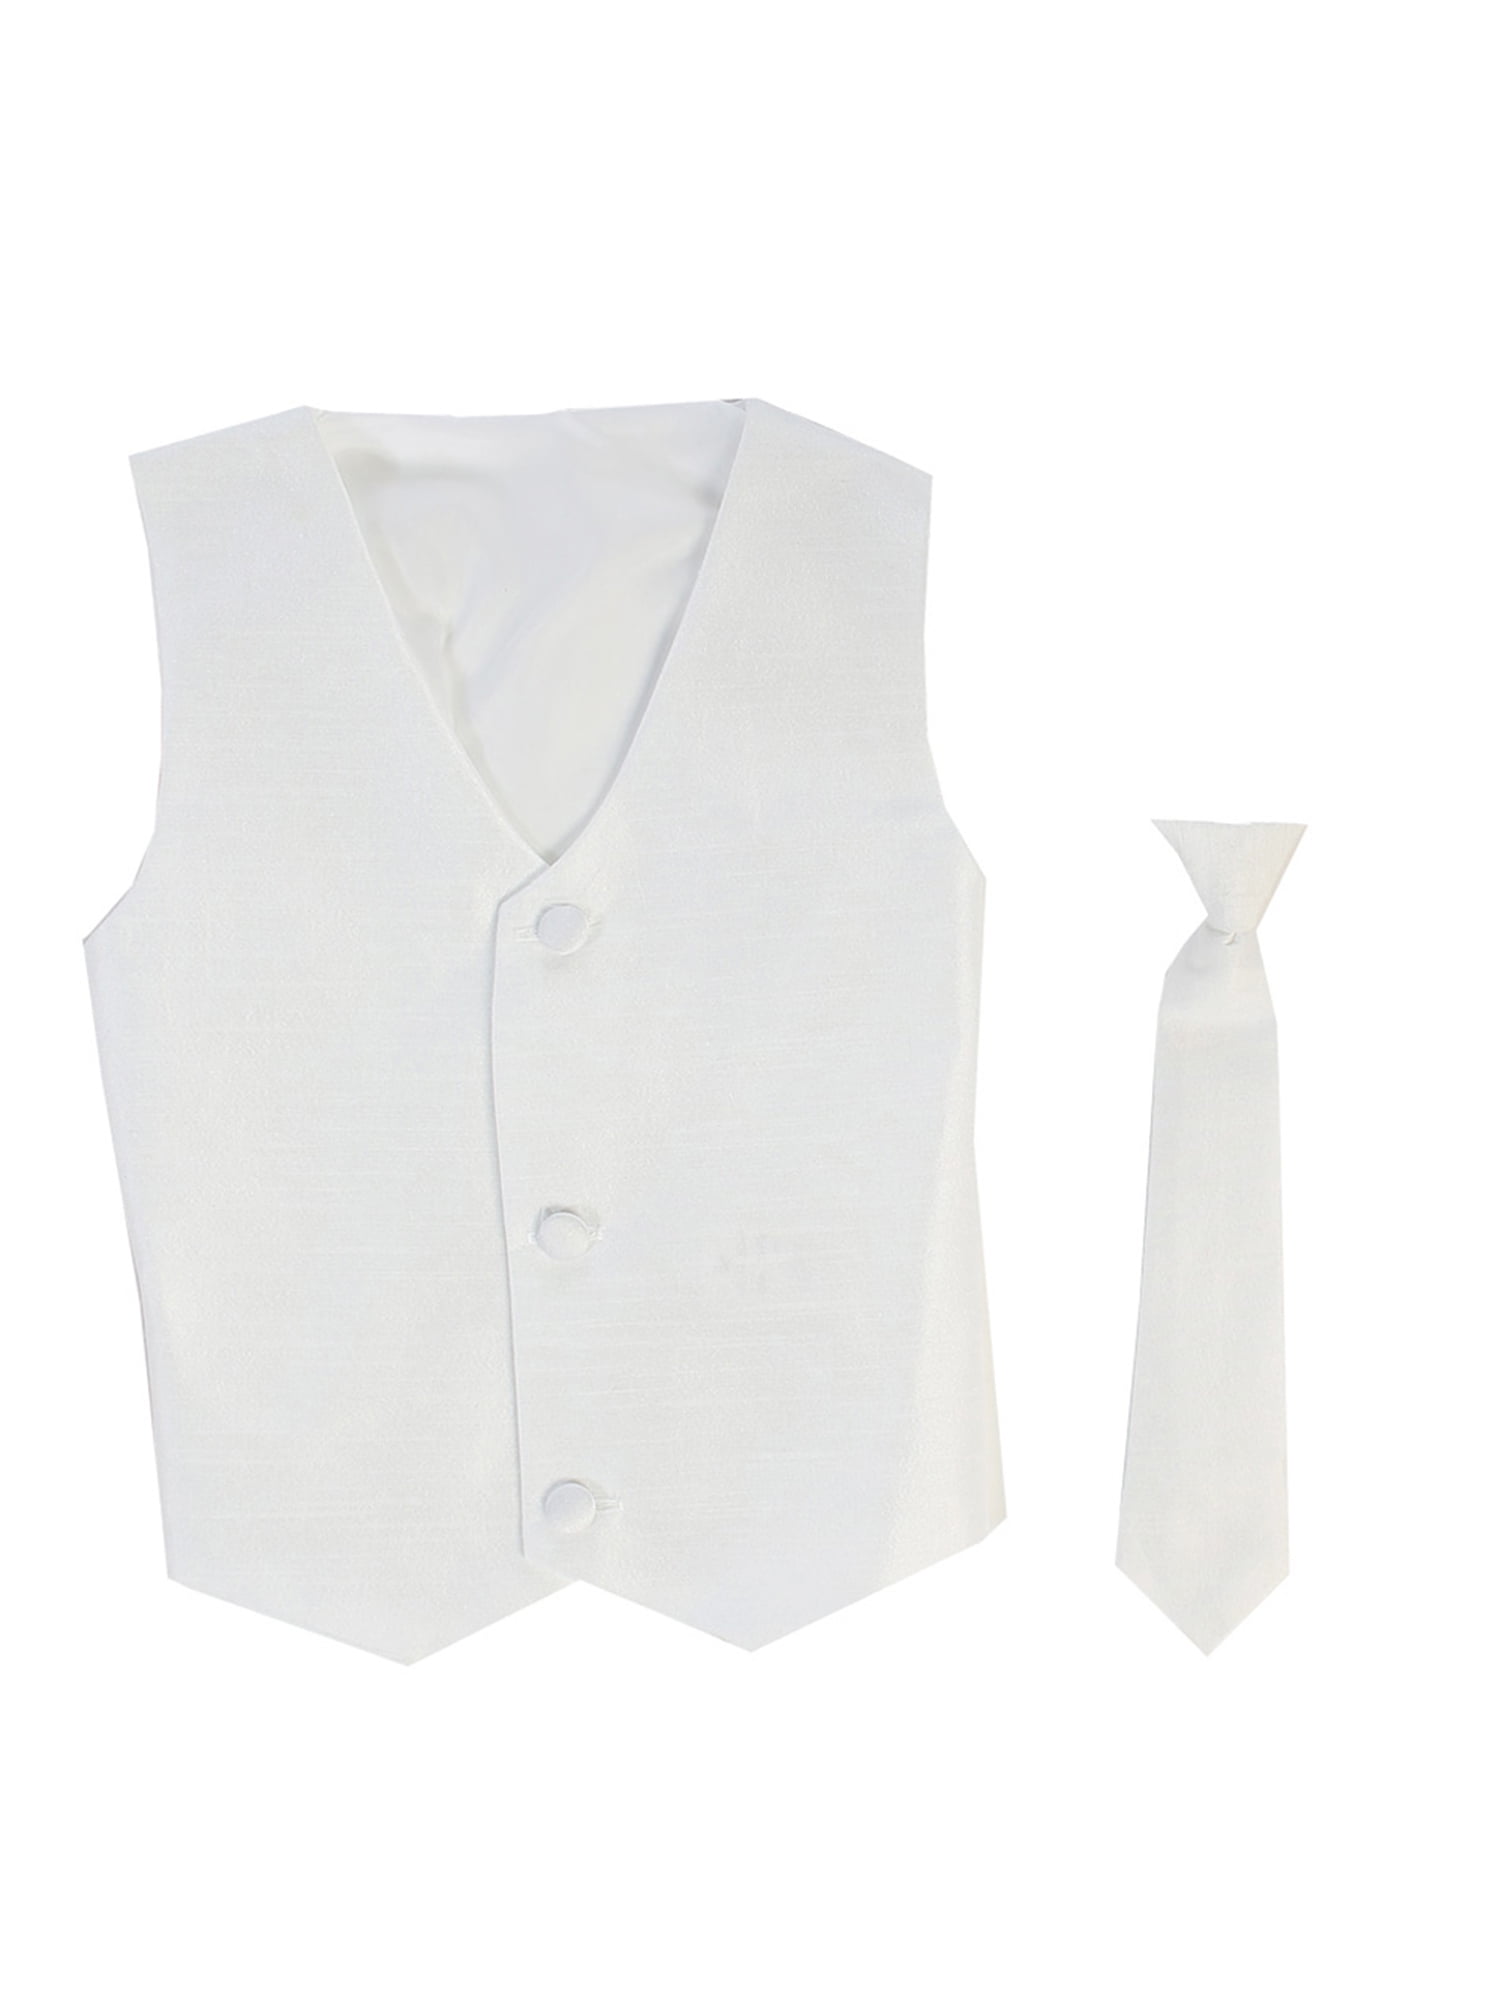 Lito Vest And Clip On Boy Necktie Set